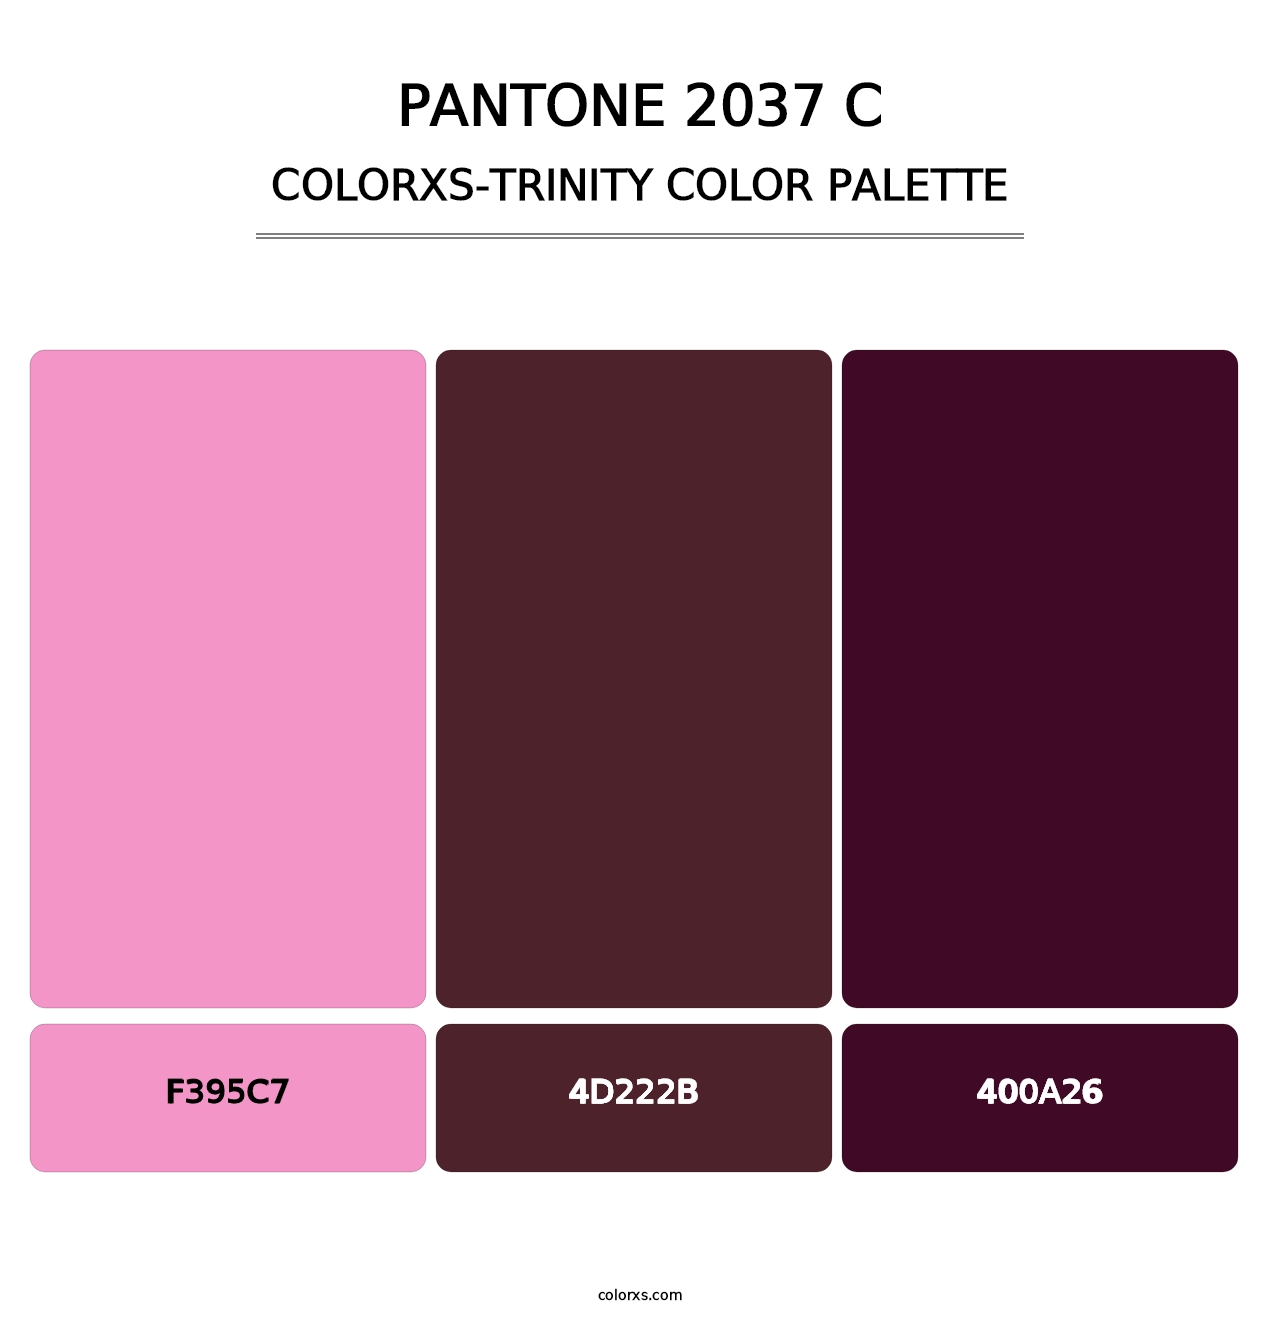 PANTONE 2037 C - Colorxs Trinity Palette